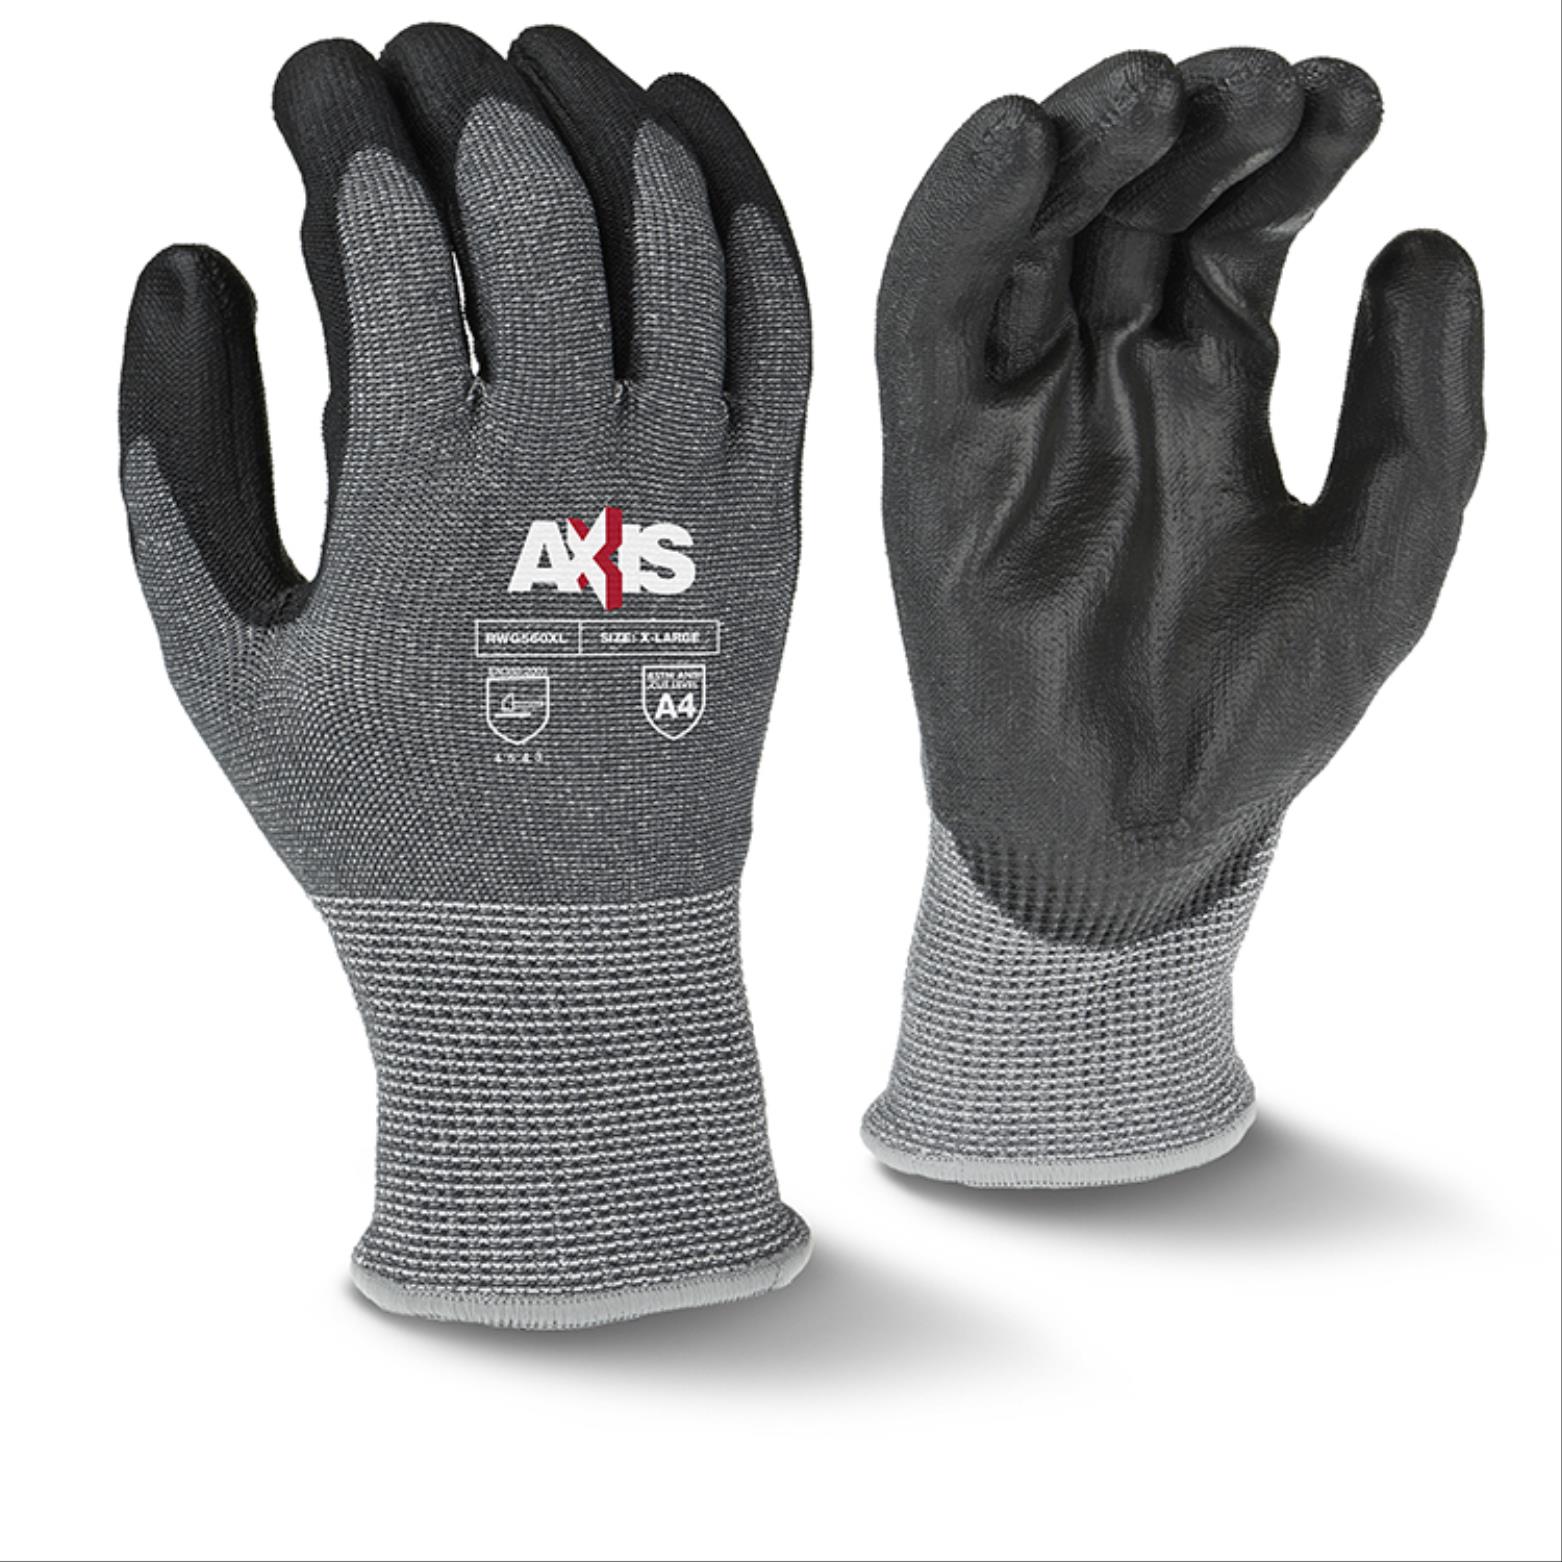 Axis™ HPPE Glove with Fiberglass, Cut Level A4